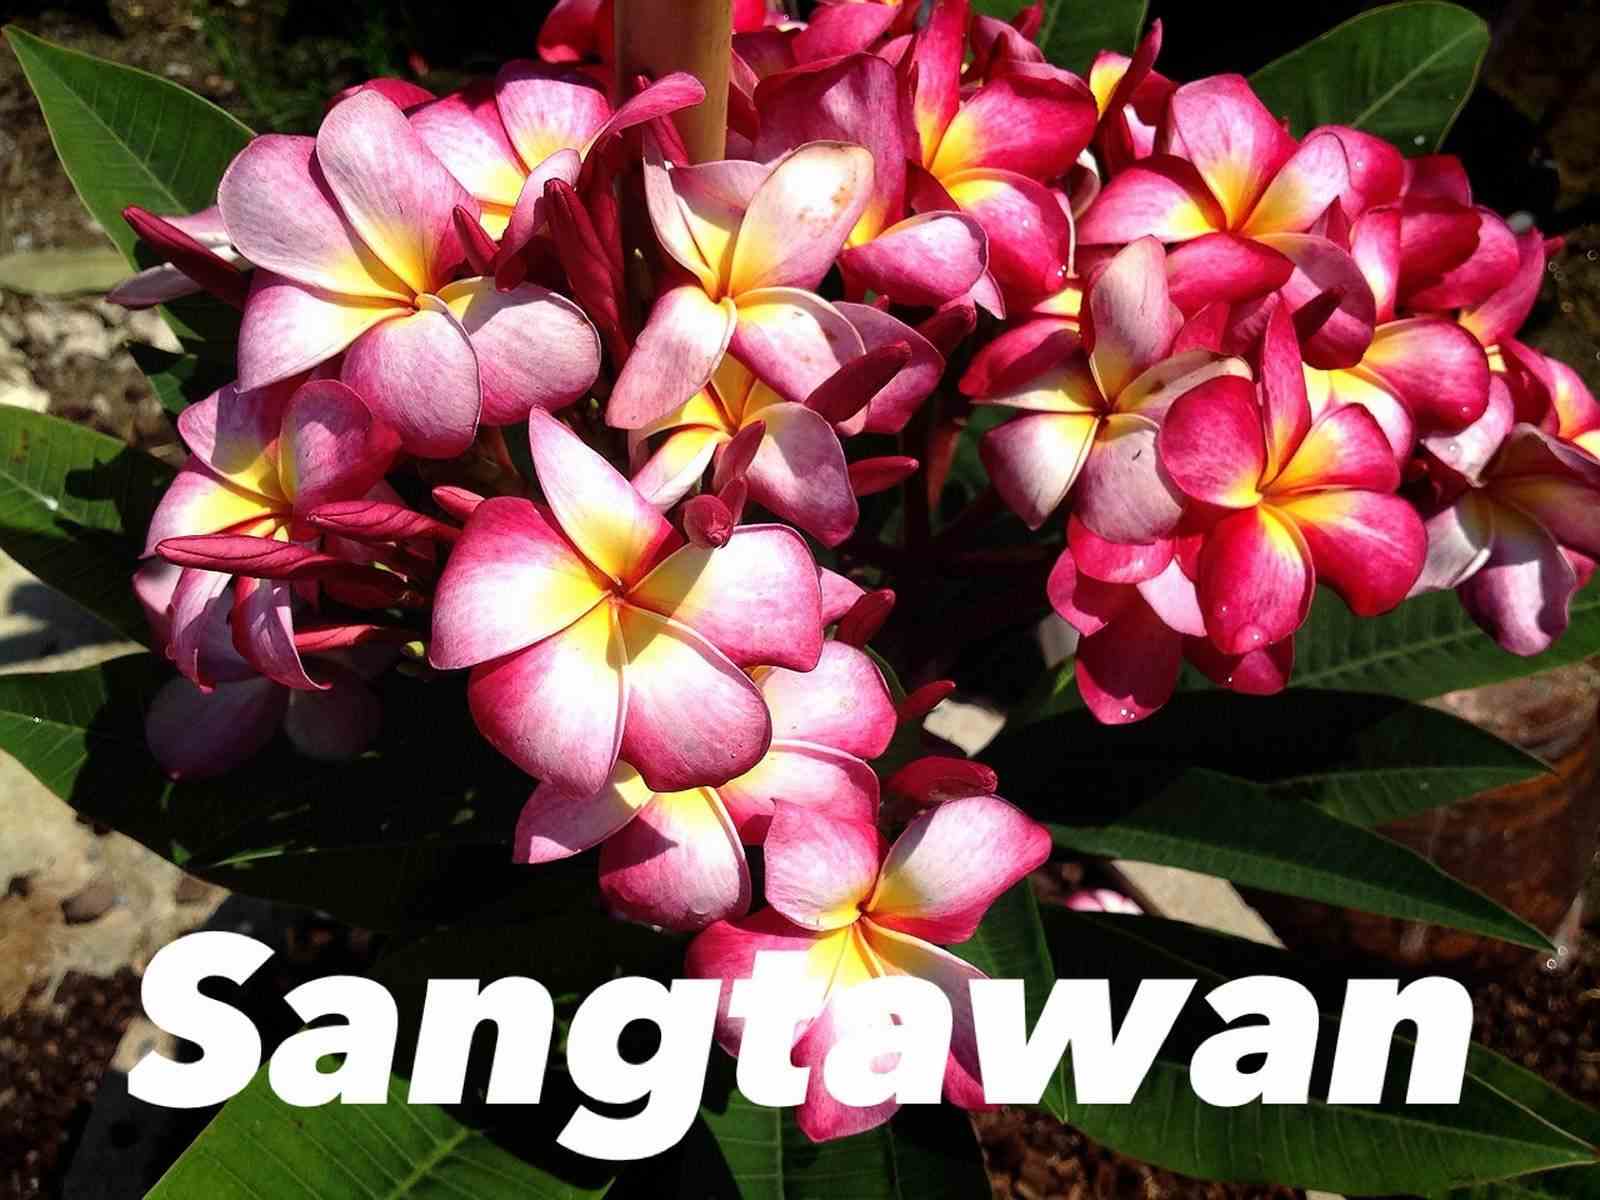 Plumeria rubra "sangtawan" (frangipanier) taille pot de 2 litres ? 20/30 cm -   blanc/jaune/rose